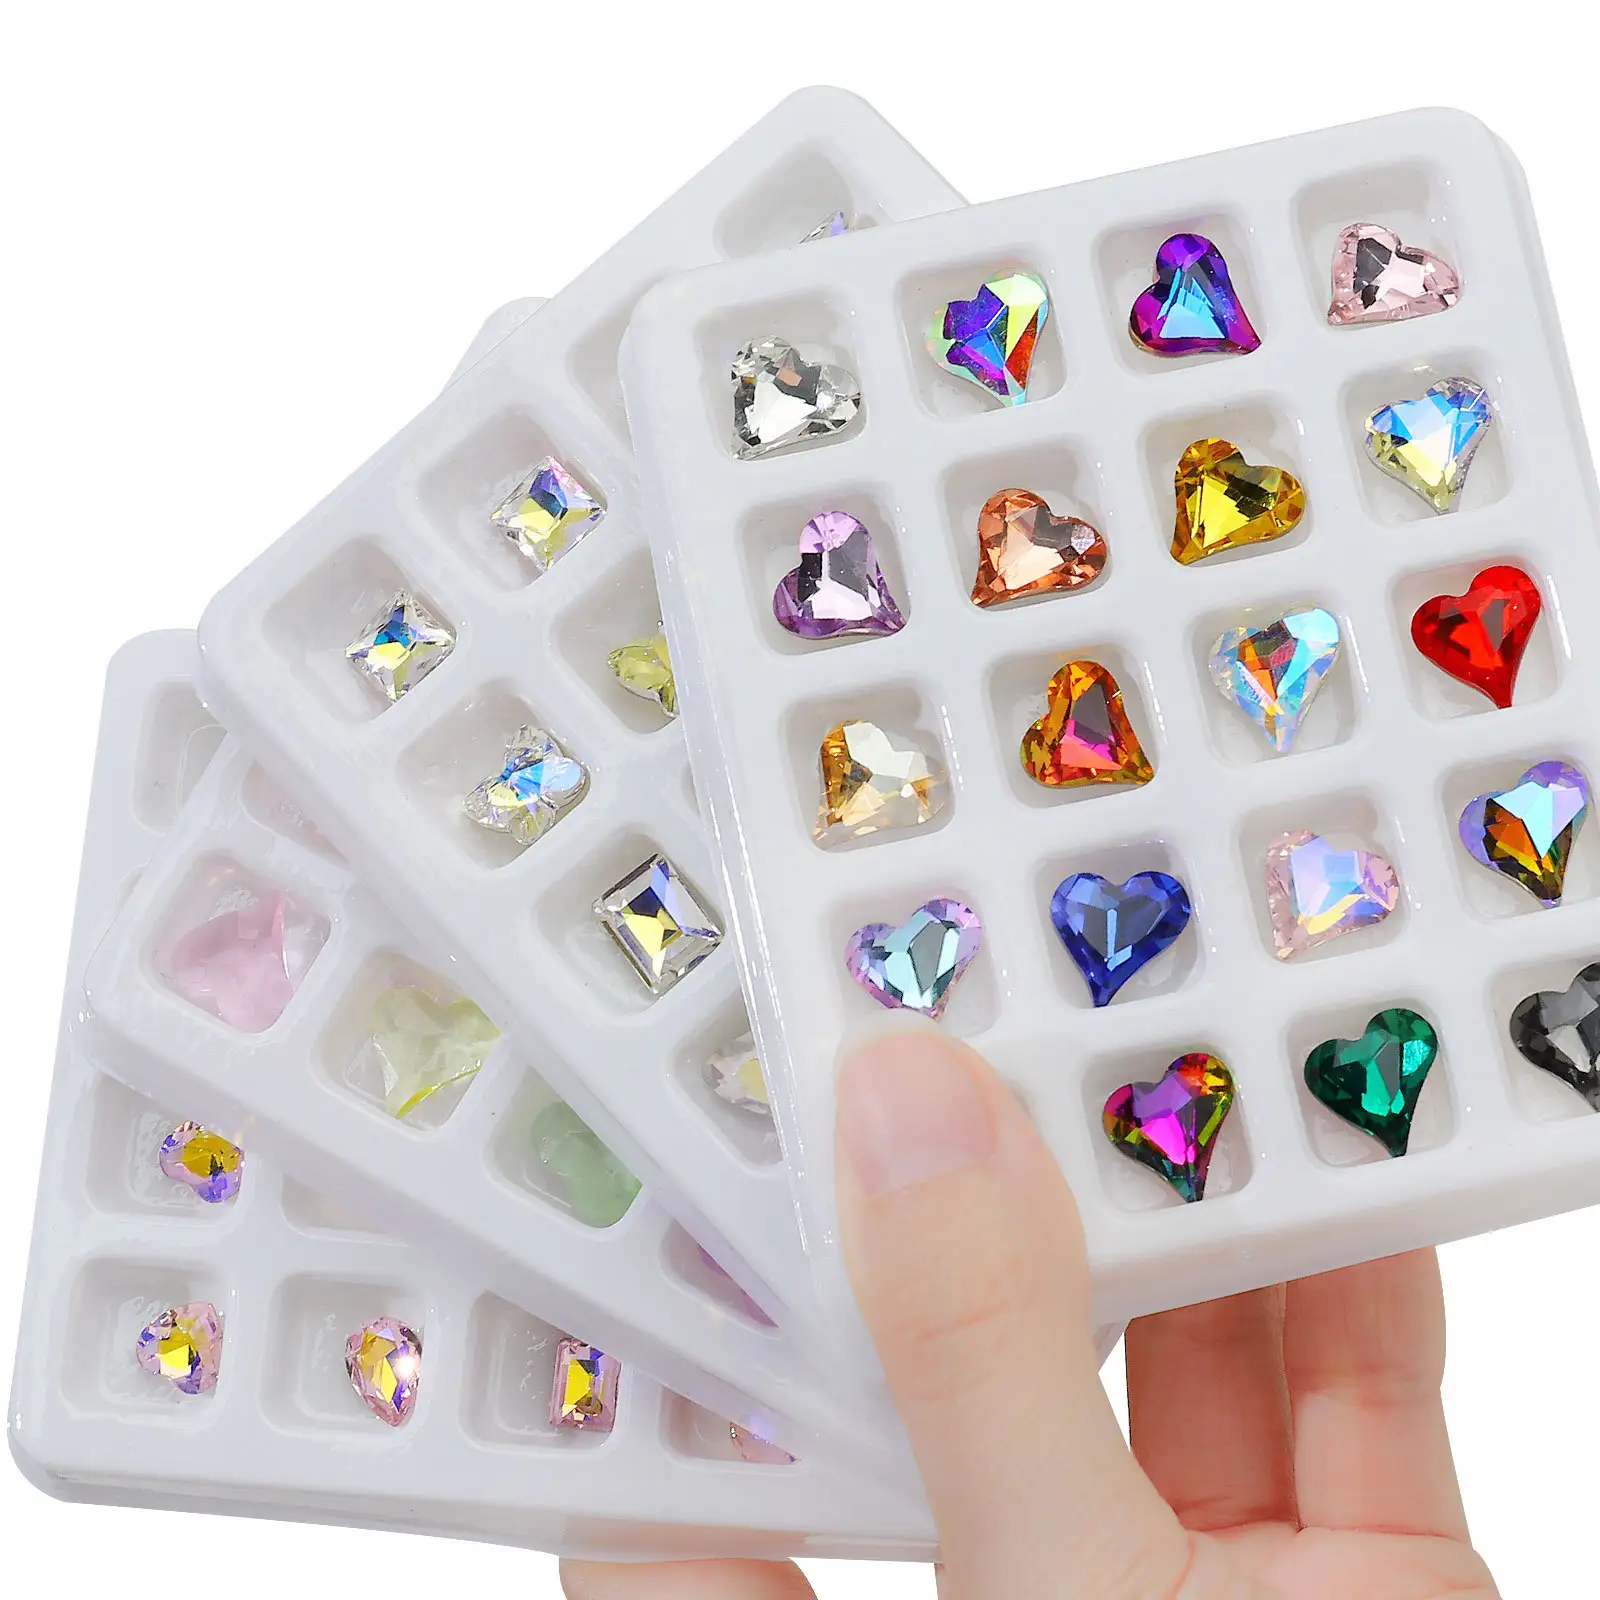 3D Nail Art Decorations heart shape carved Rhinestones DIY Crystal Stones Charms Glass Nail Rhinestones